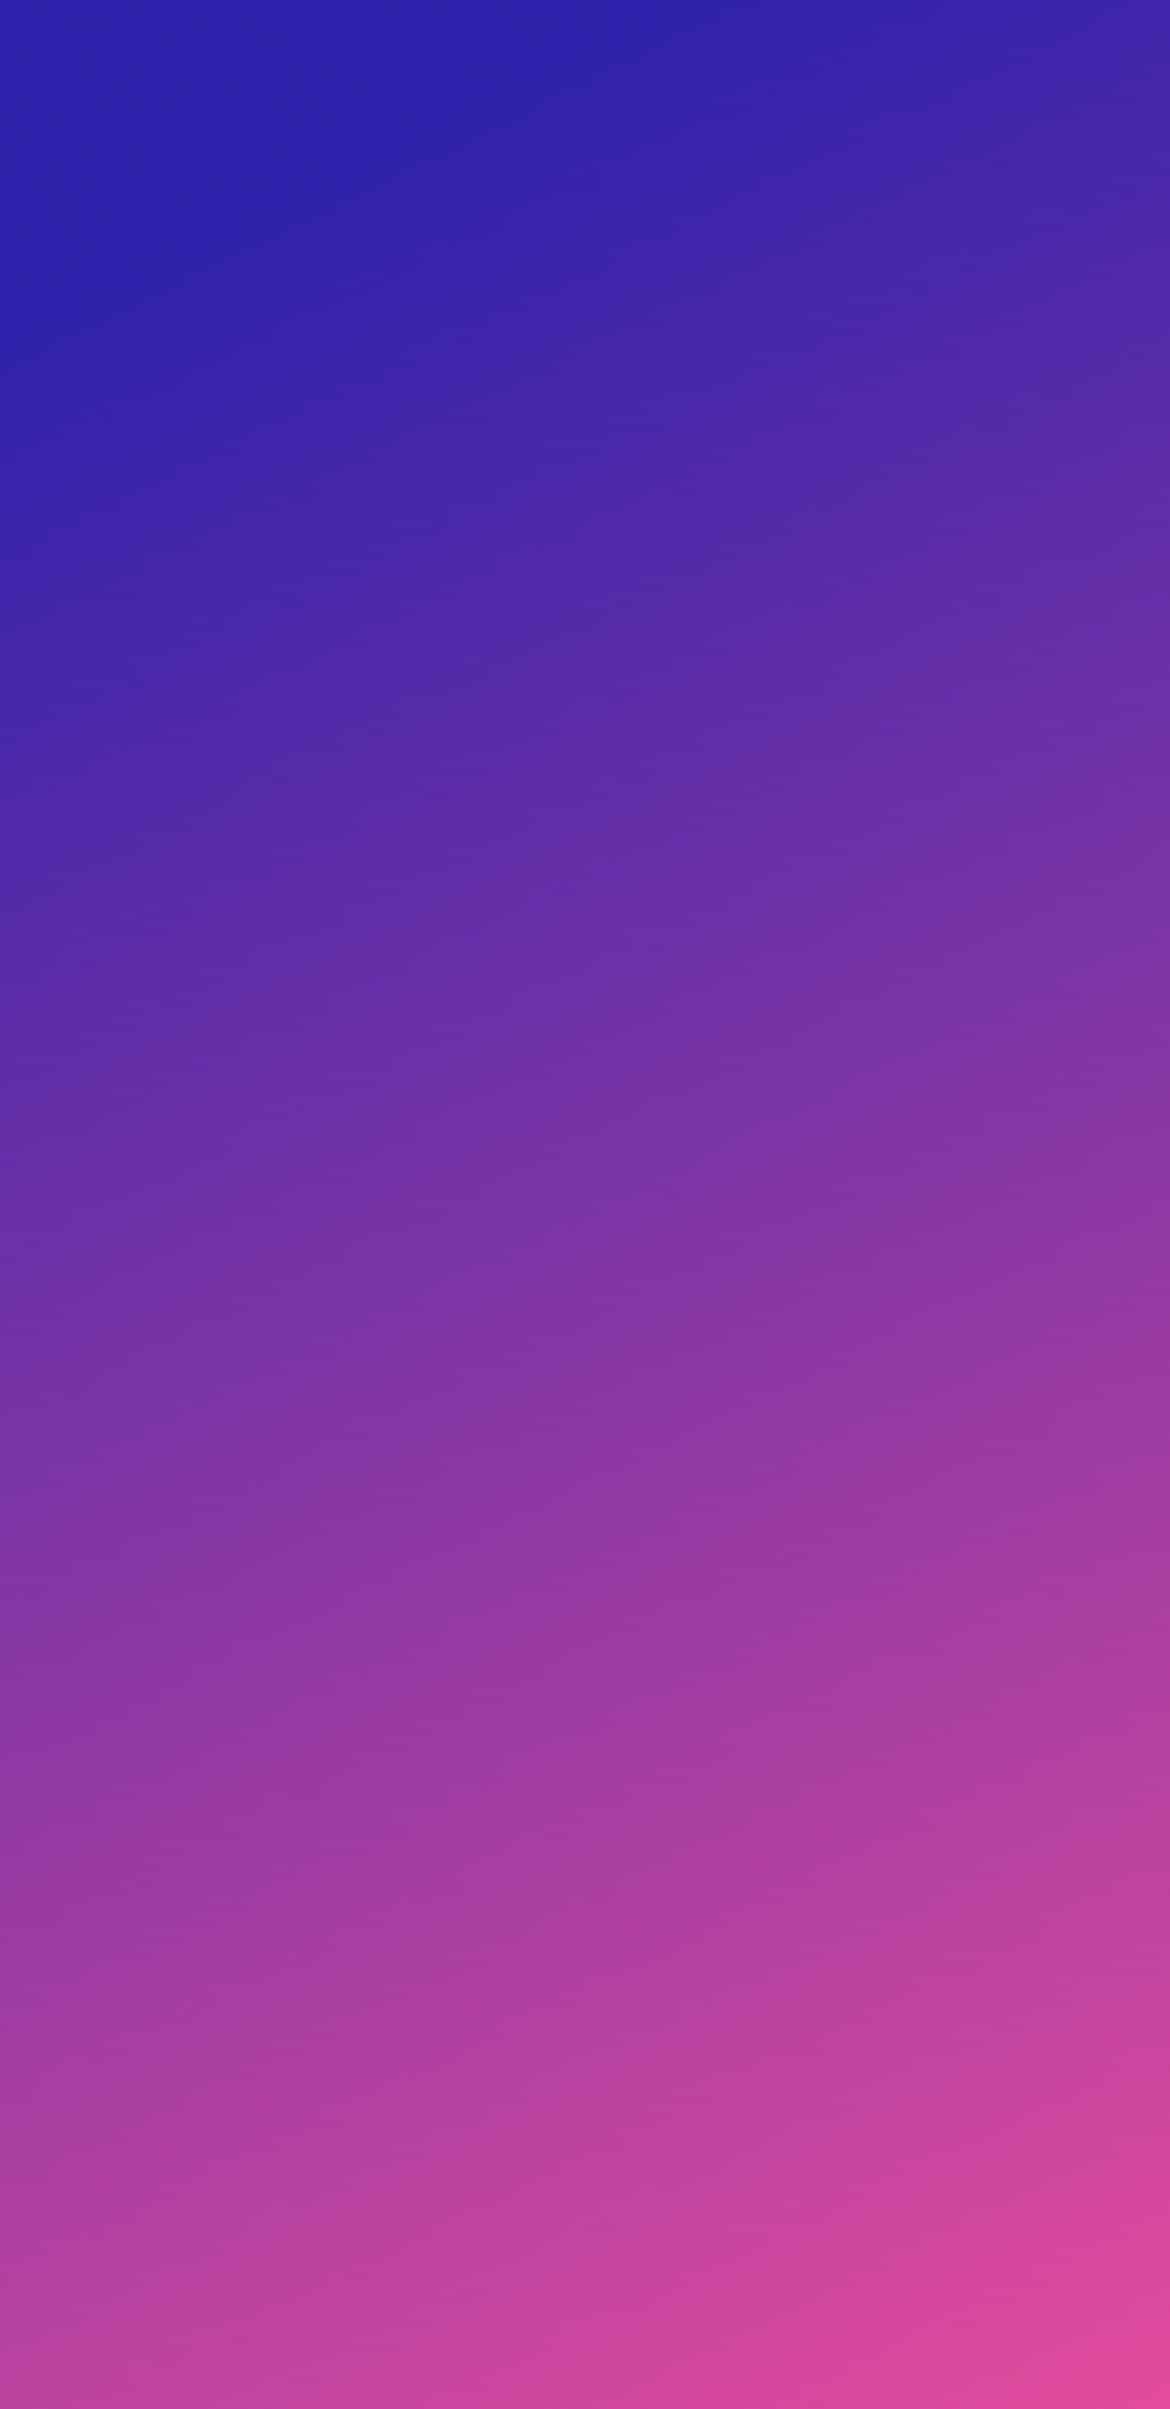 IPhone wallpaper Gradient pink purple sky no clouds - Dark purple